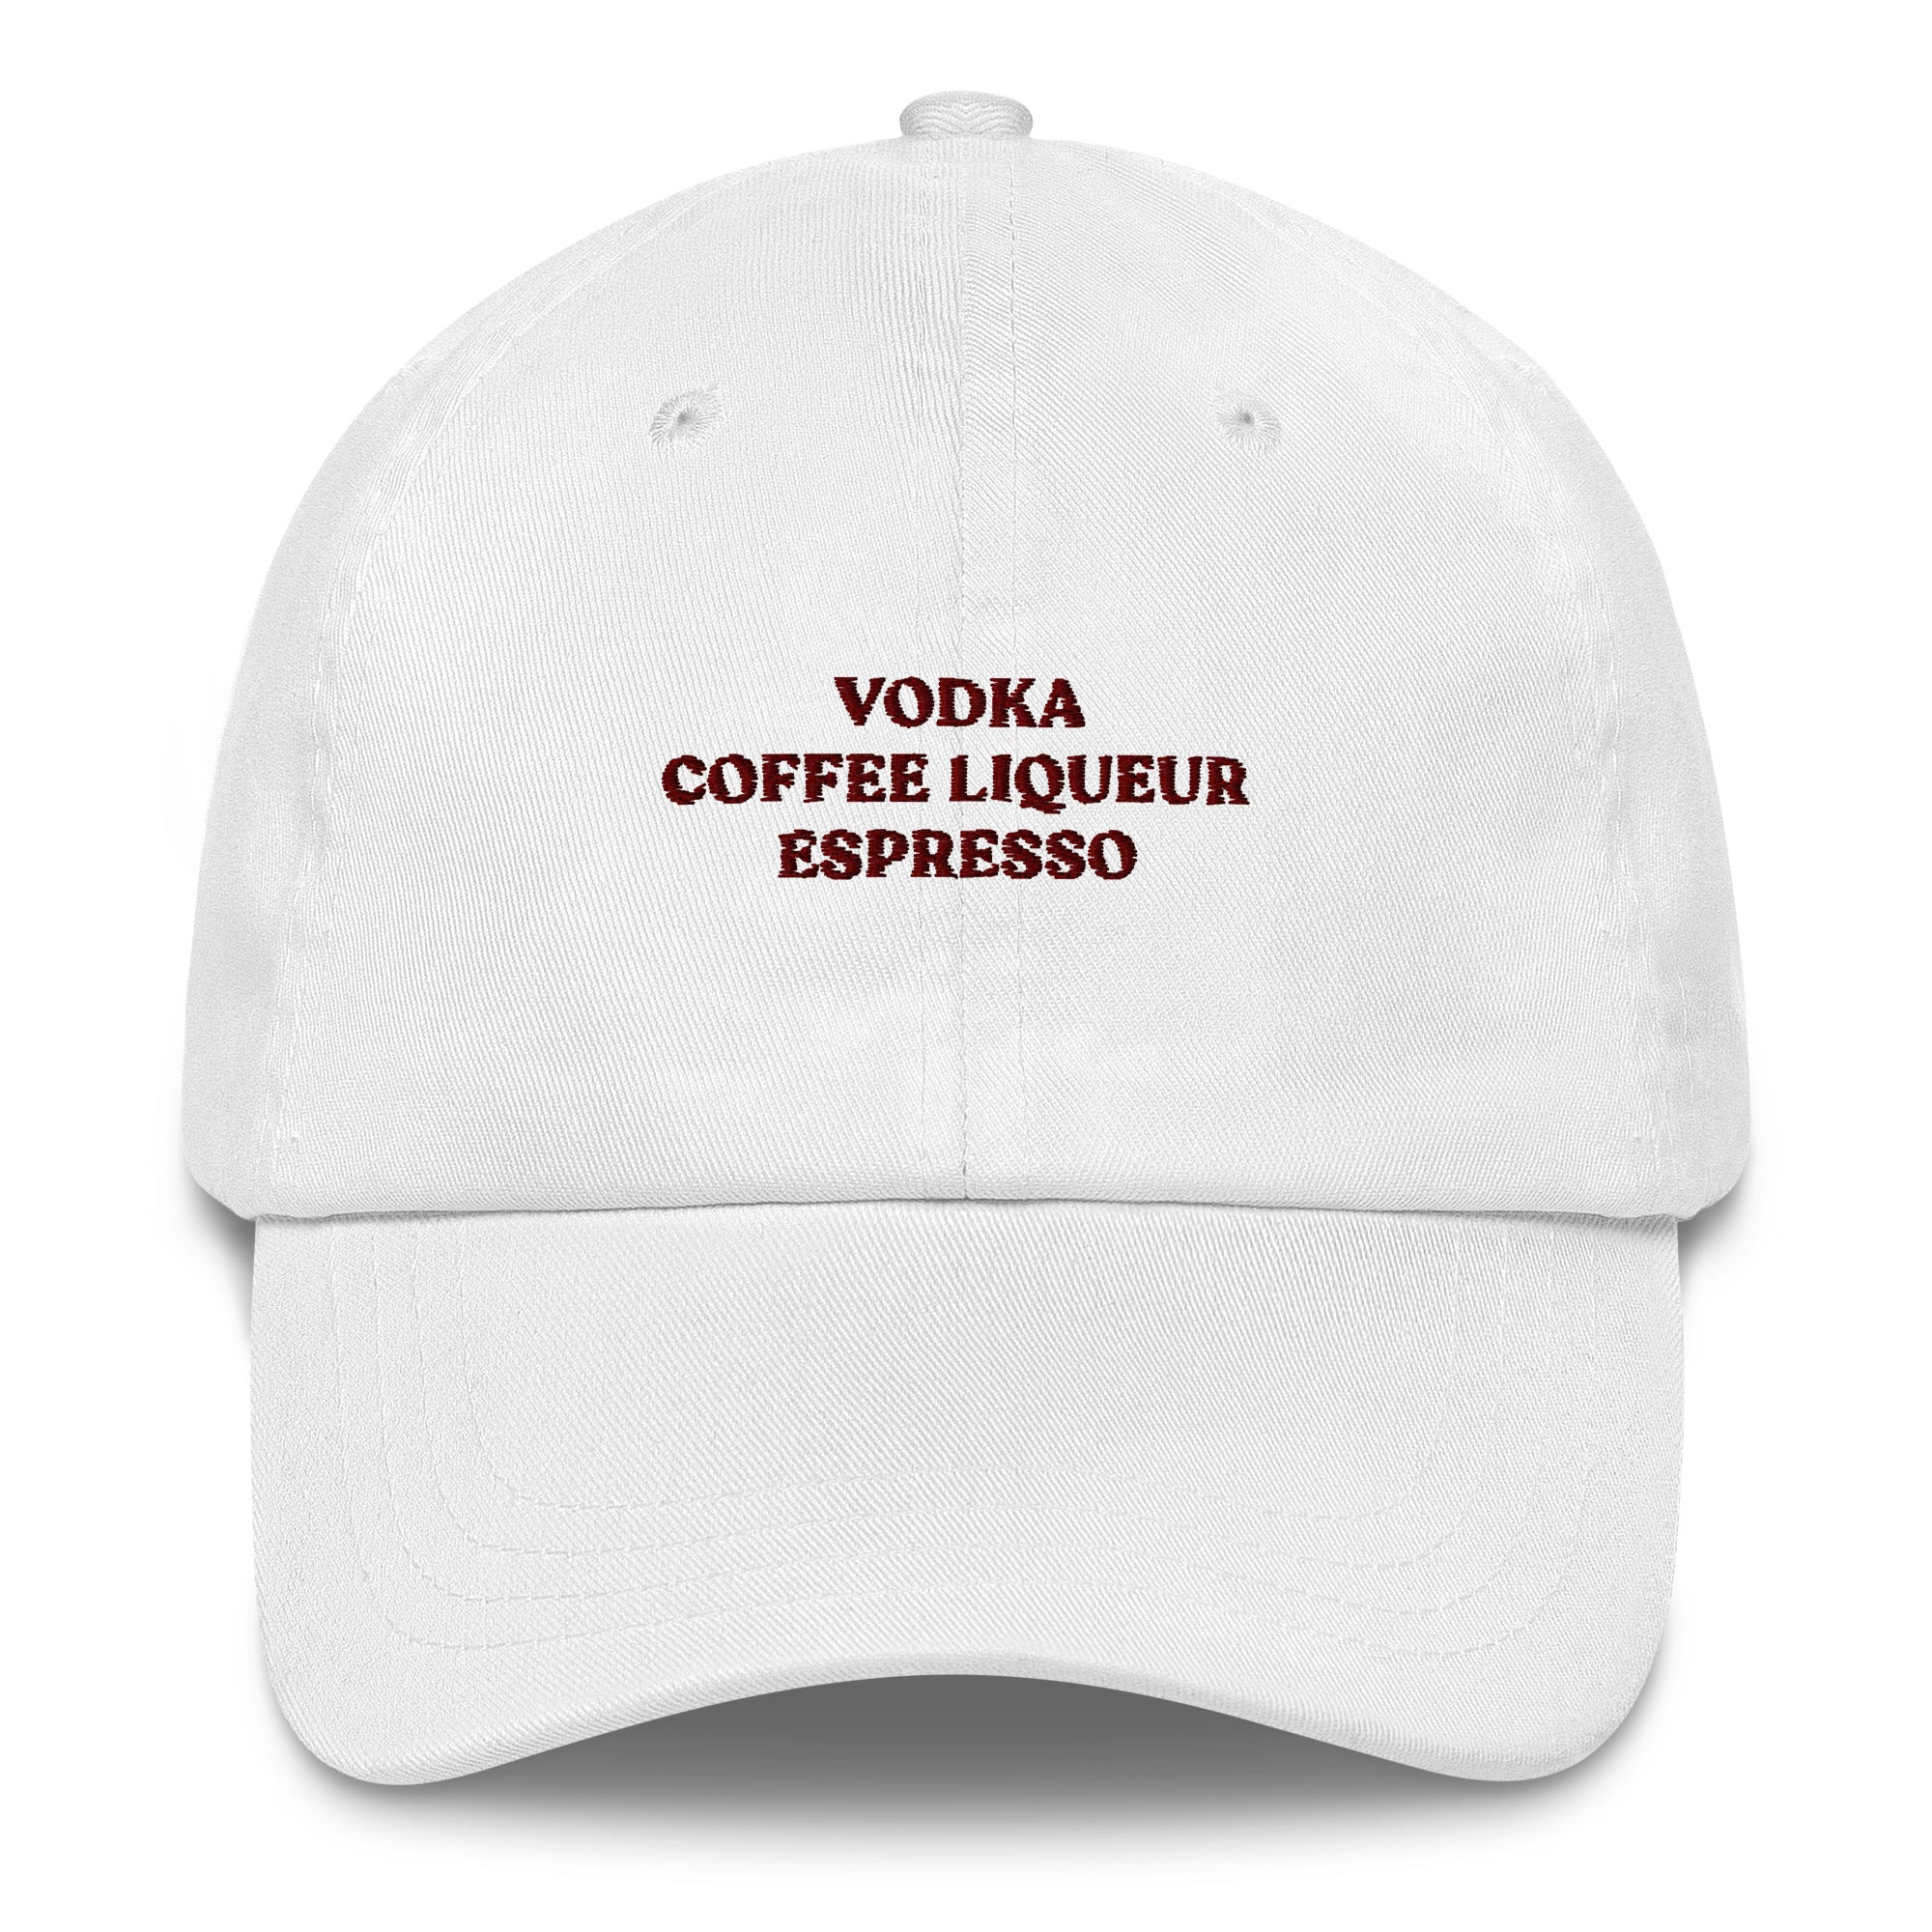 Vodka Coffee Liqueur Espresso - Cap